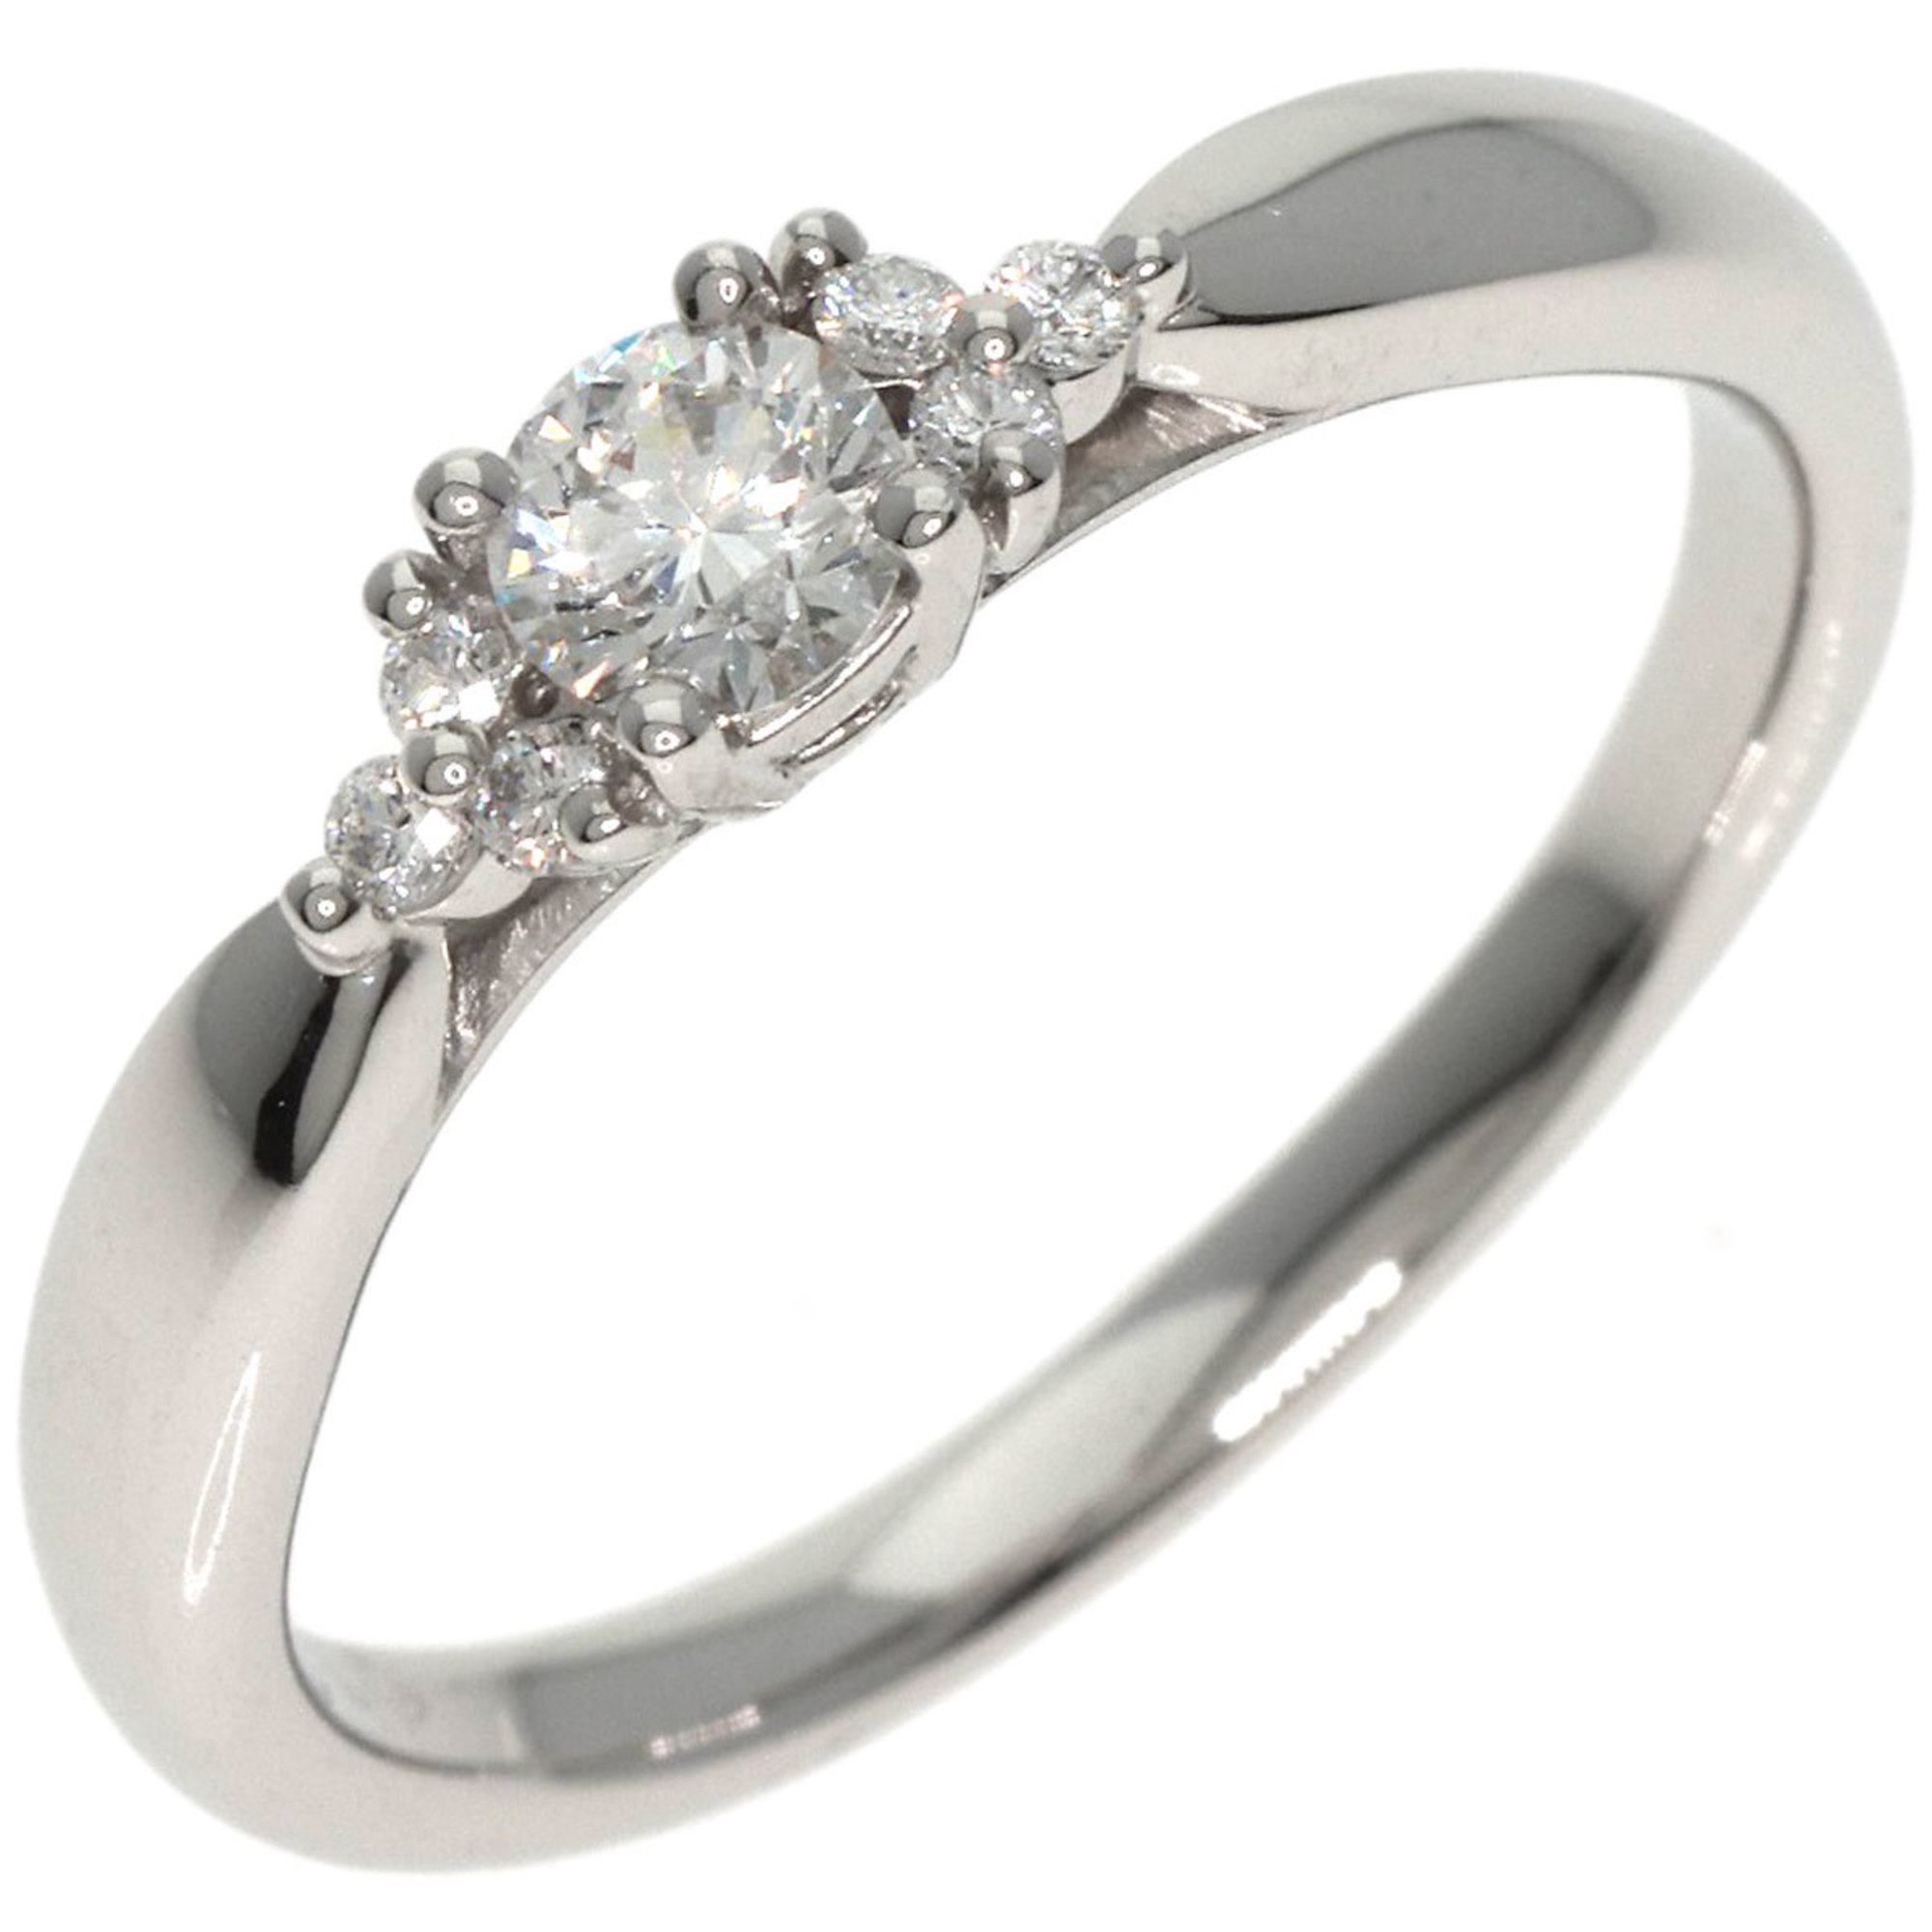 Tiffany & Co. Harmony Cluster Diamond Ring, Platinum PT950, Women's, TIFFANY